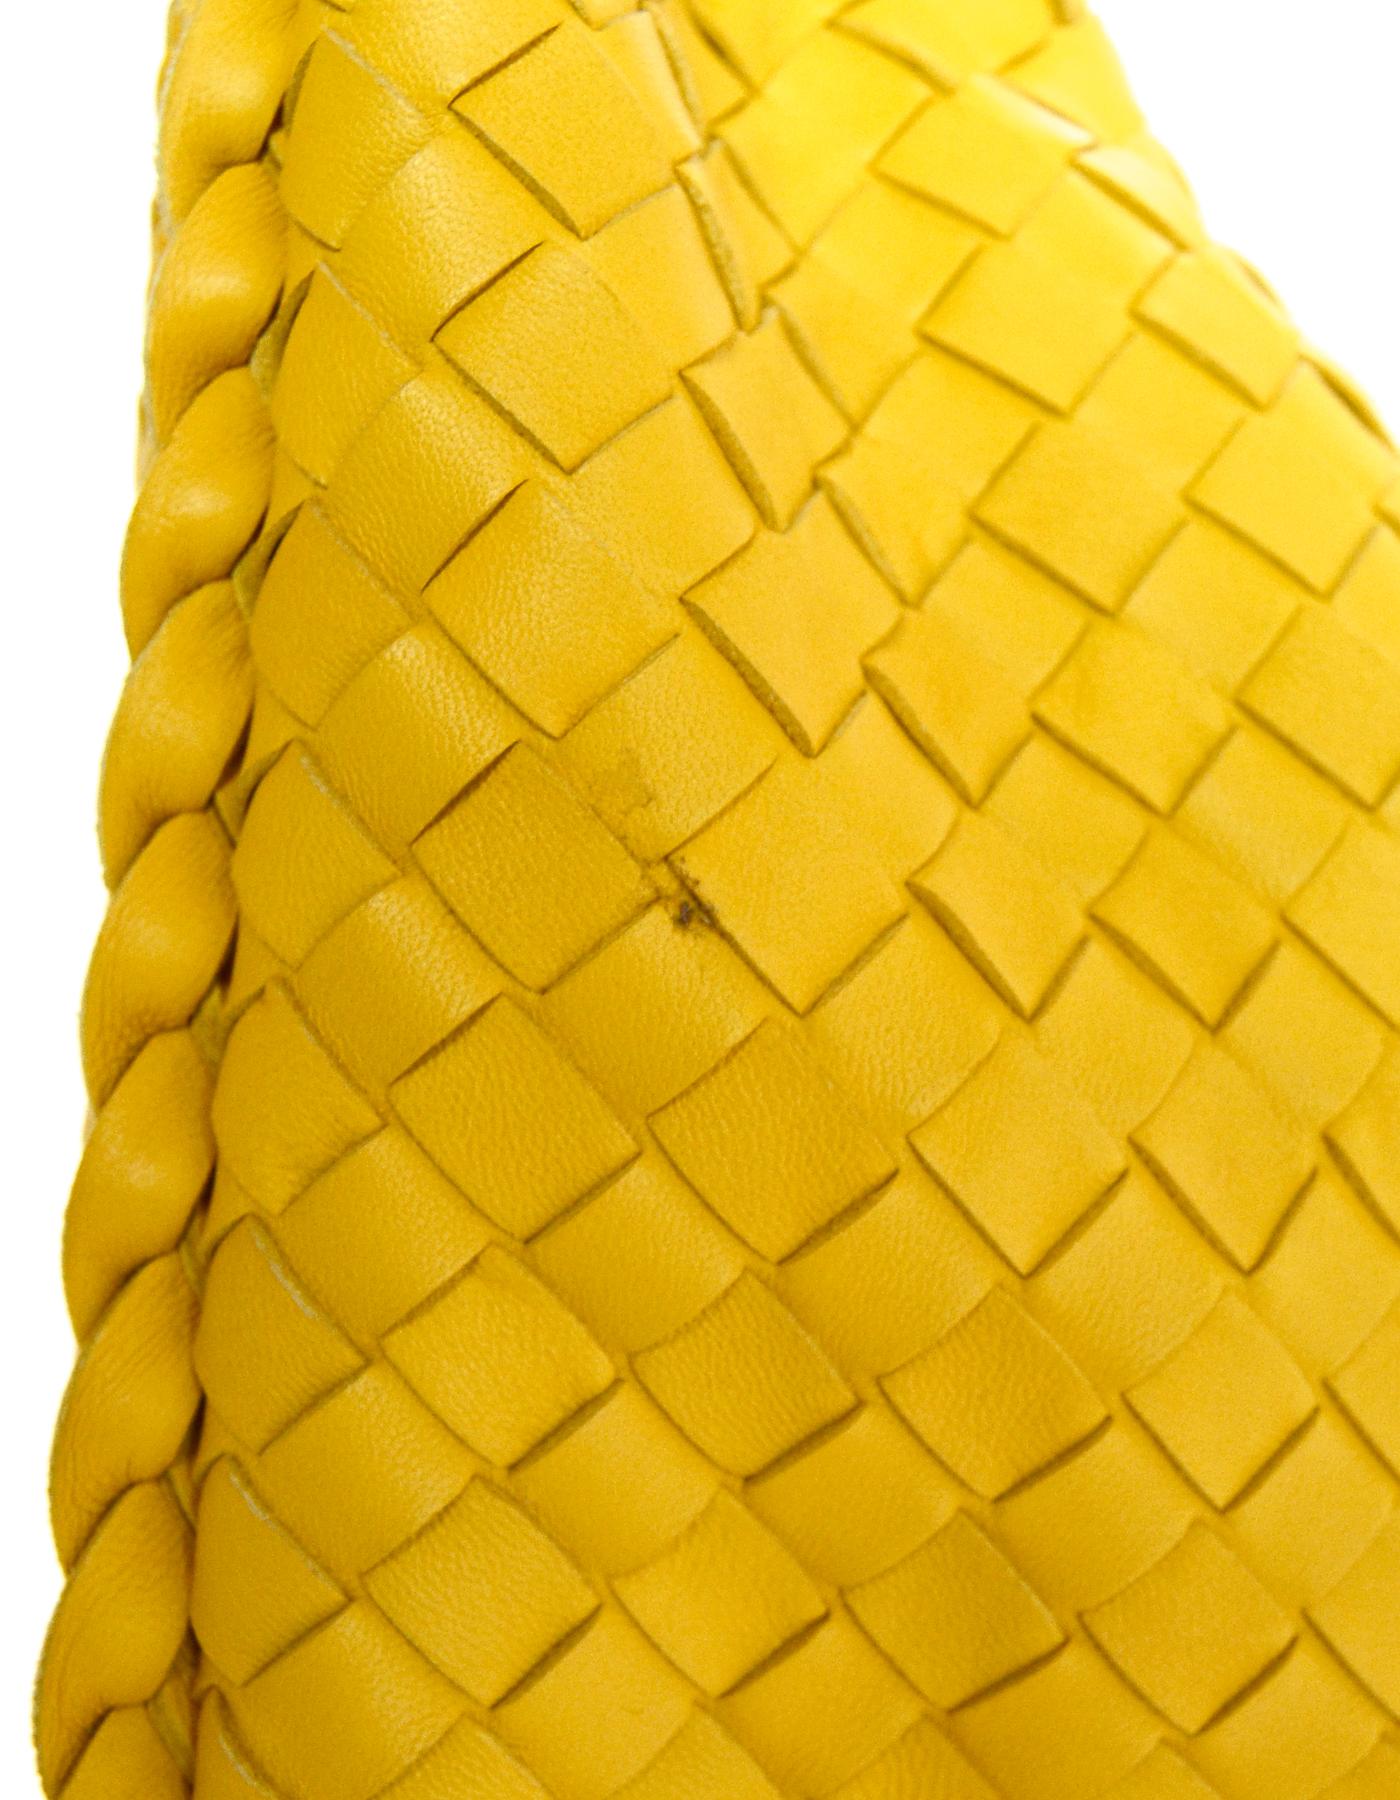 Bottega Veneta Yellow Woven Leather Nappa Intrecciato Medium Veneta Hobo Bag 3